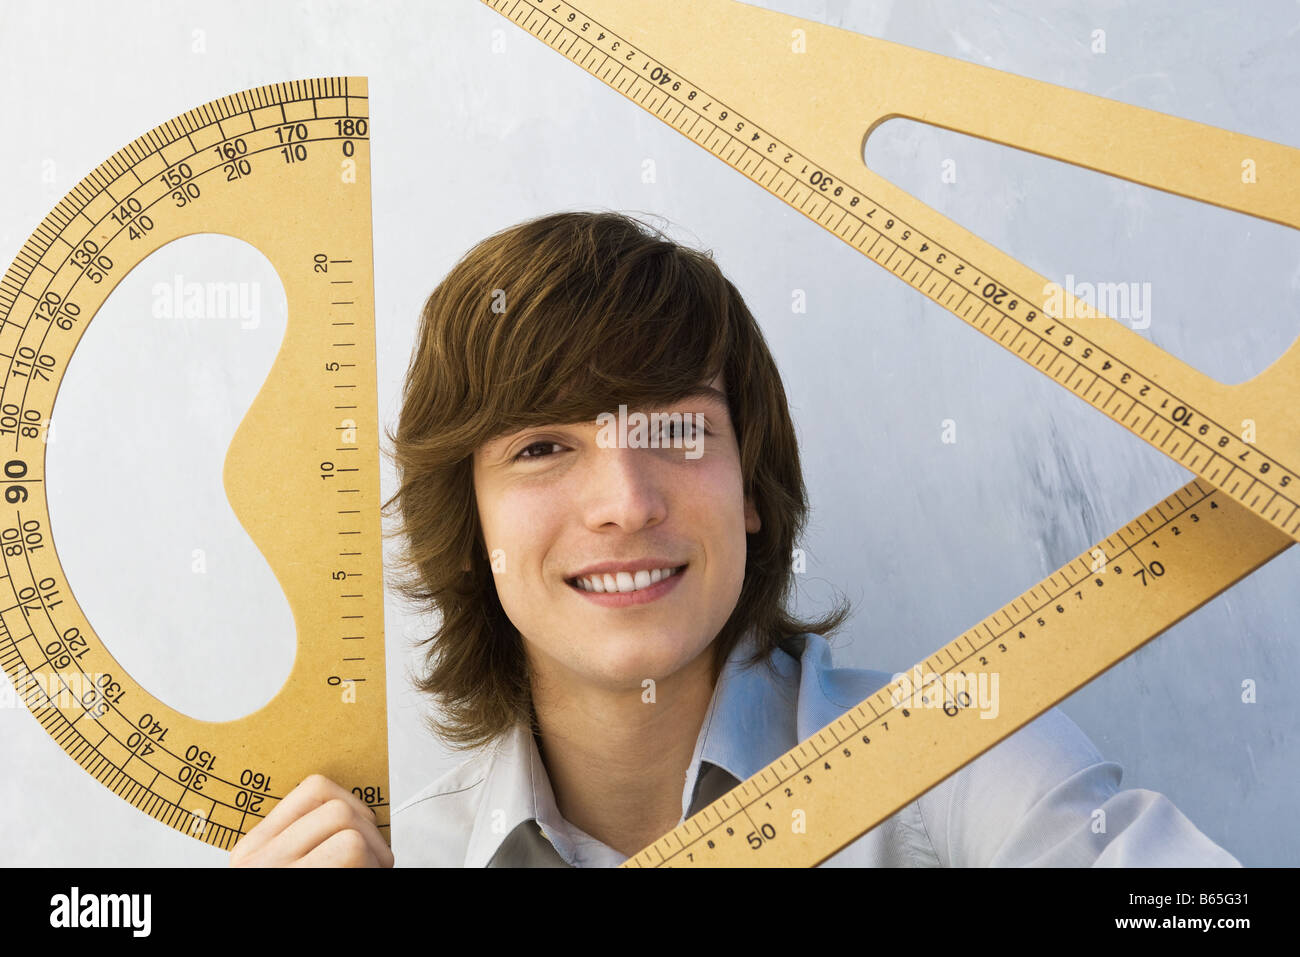 Young man holding various measuring instruments, smiling at camera Stock Photo